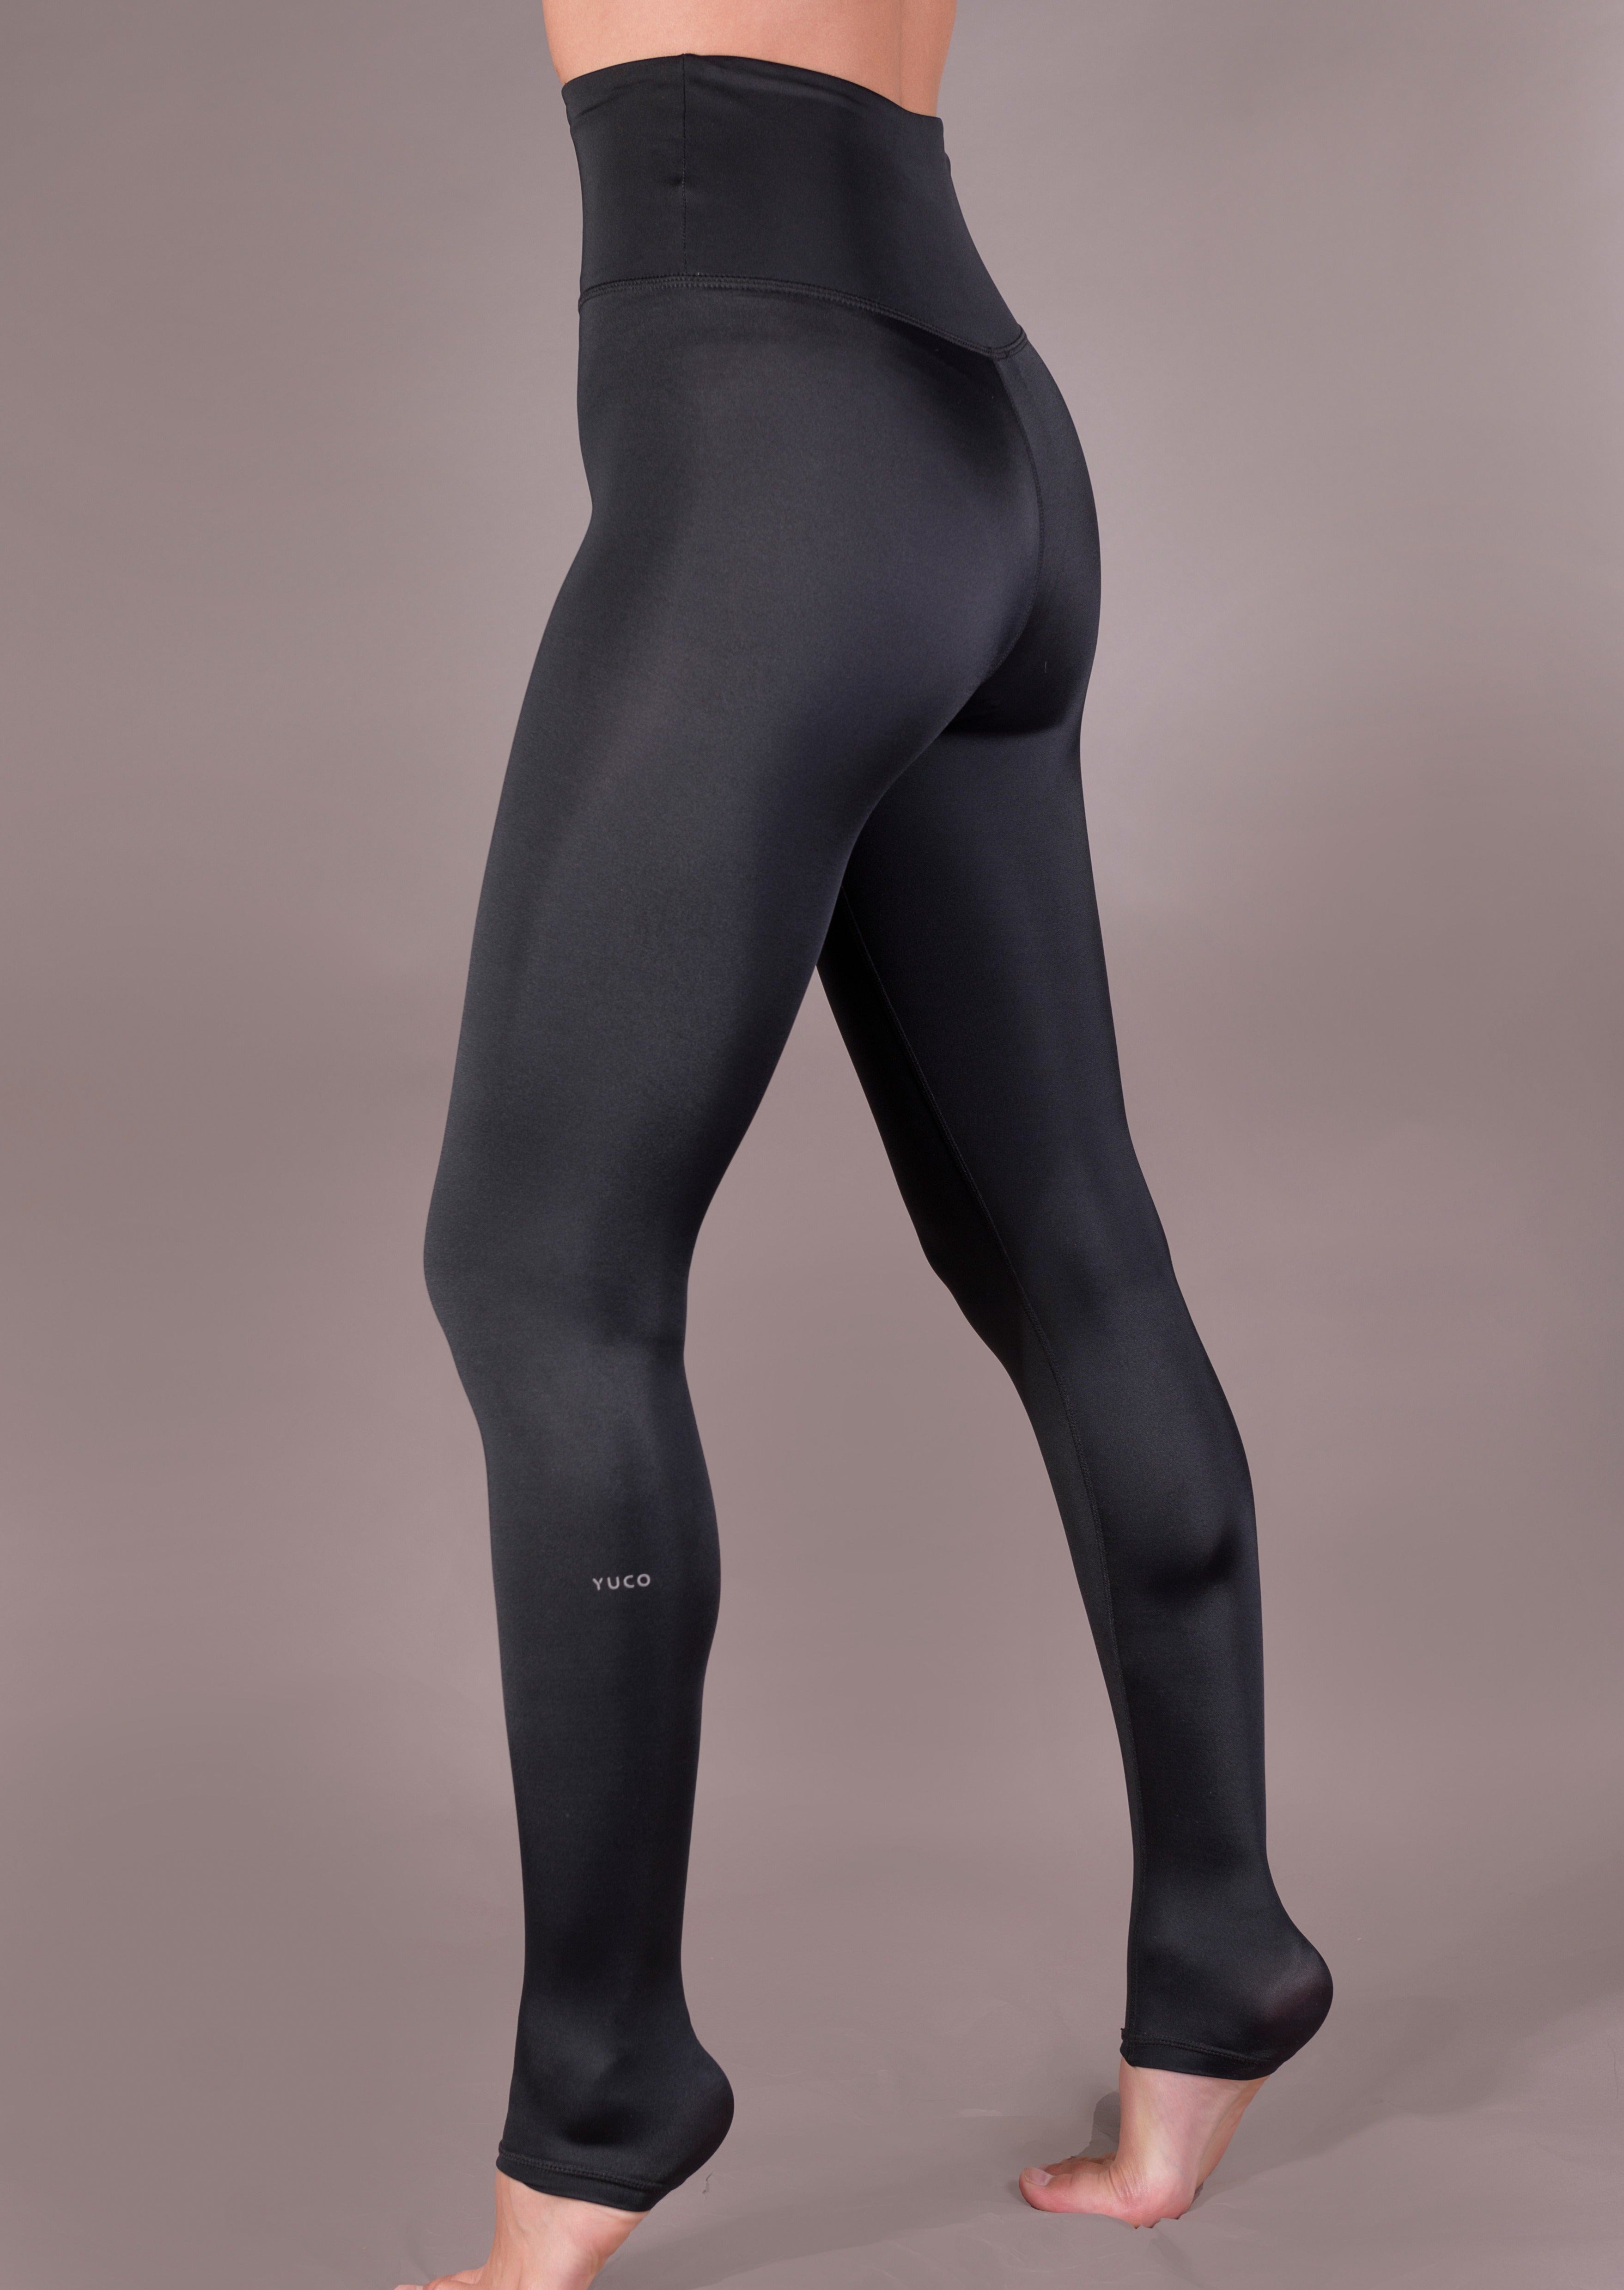 NWT Prolific Health Womens Jean Look Jeggings Slimming Black Spandex  Leggings XL